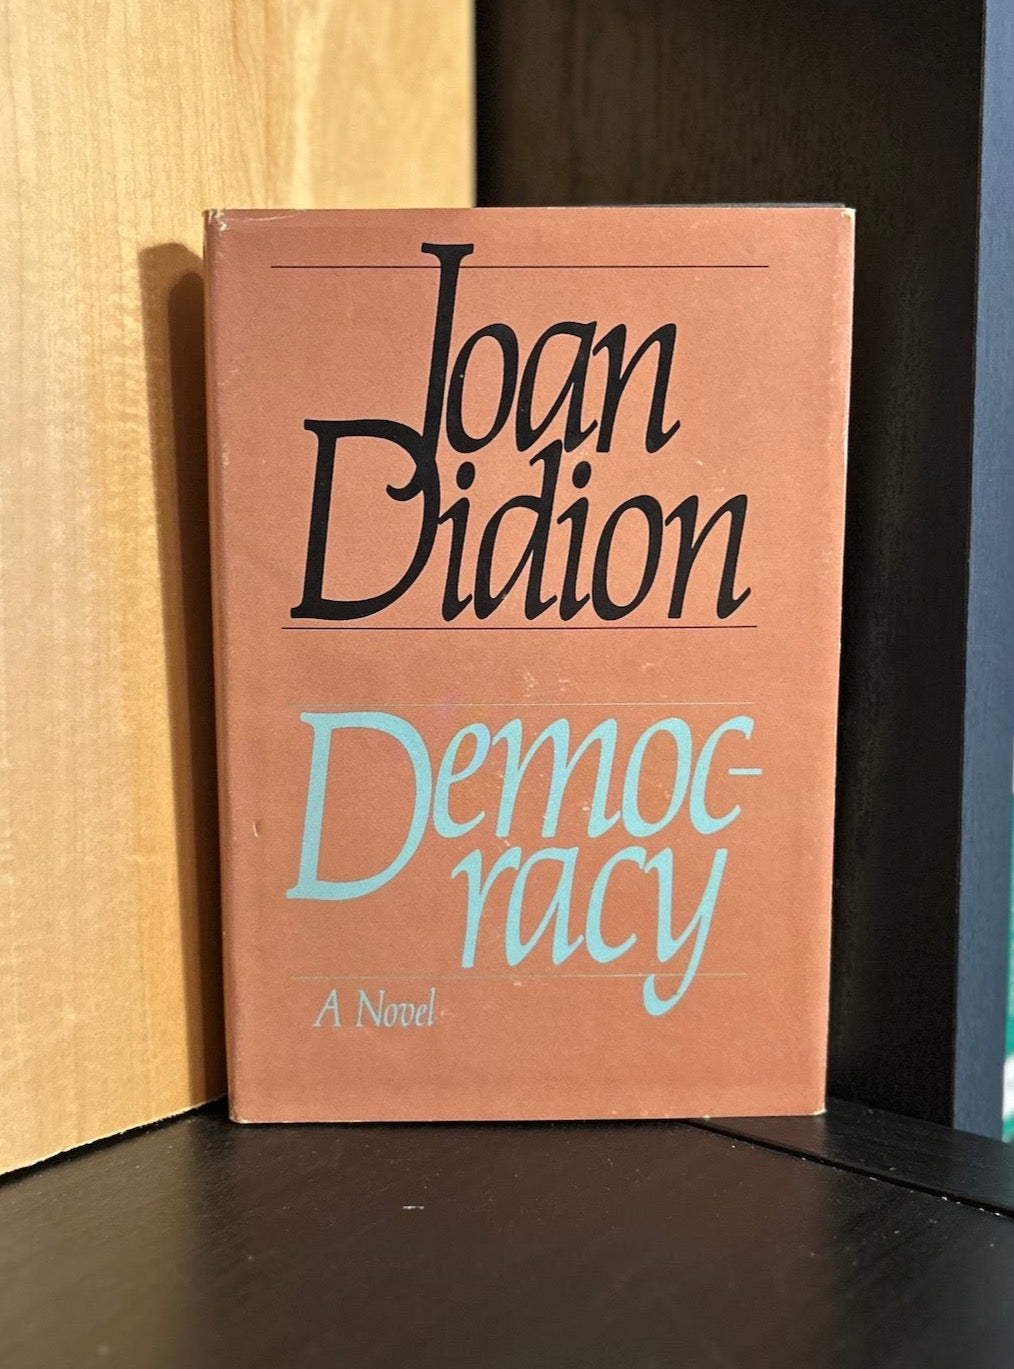 Democracy - Joan Didion